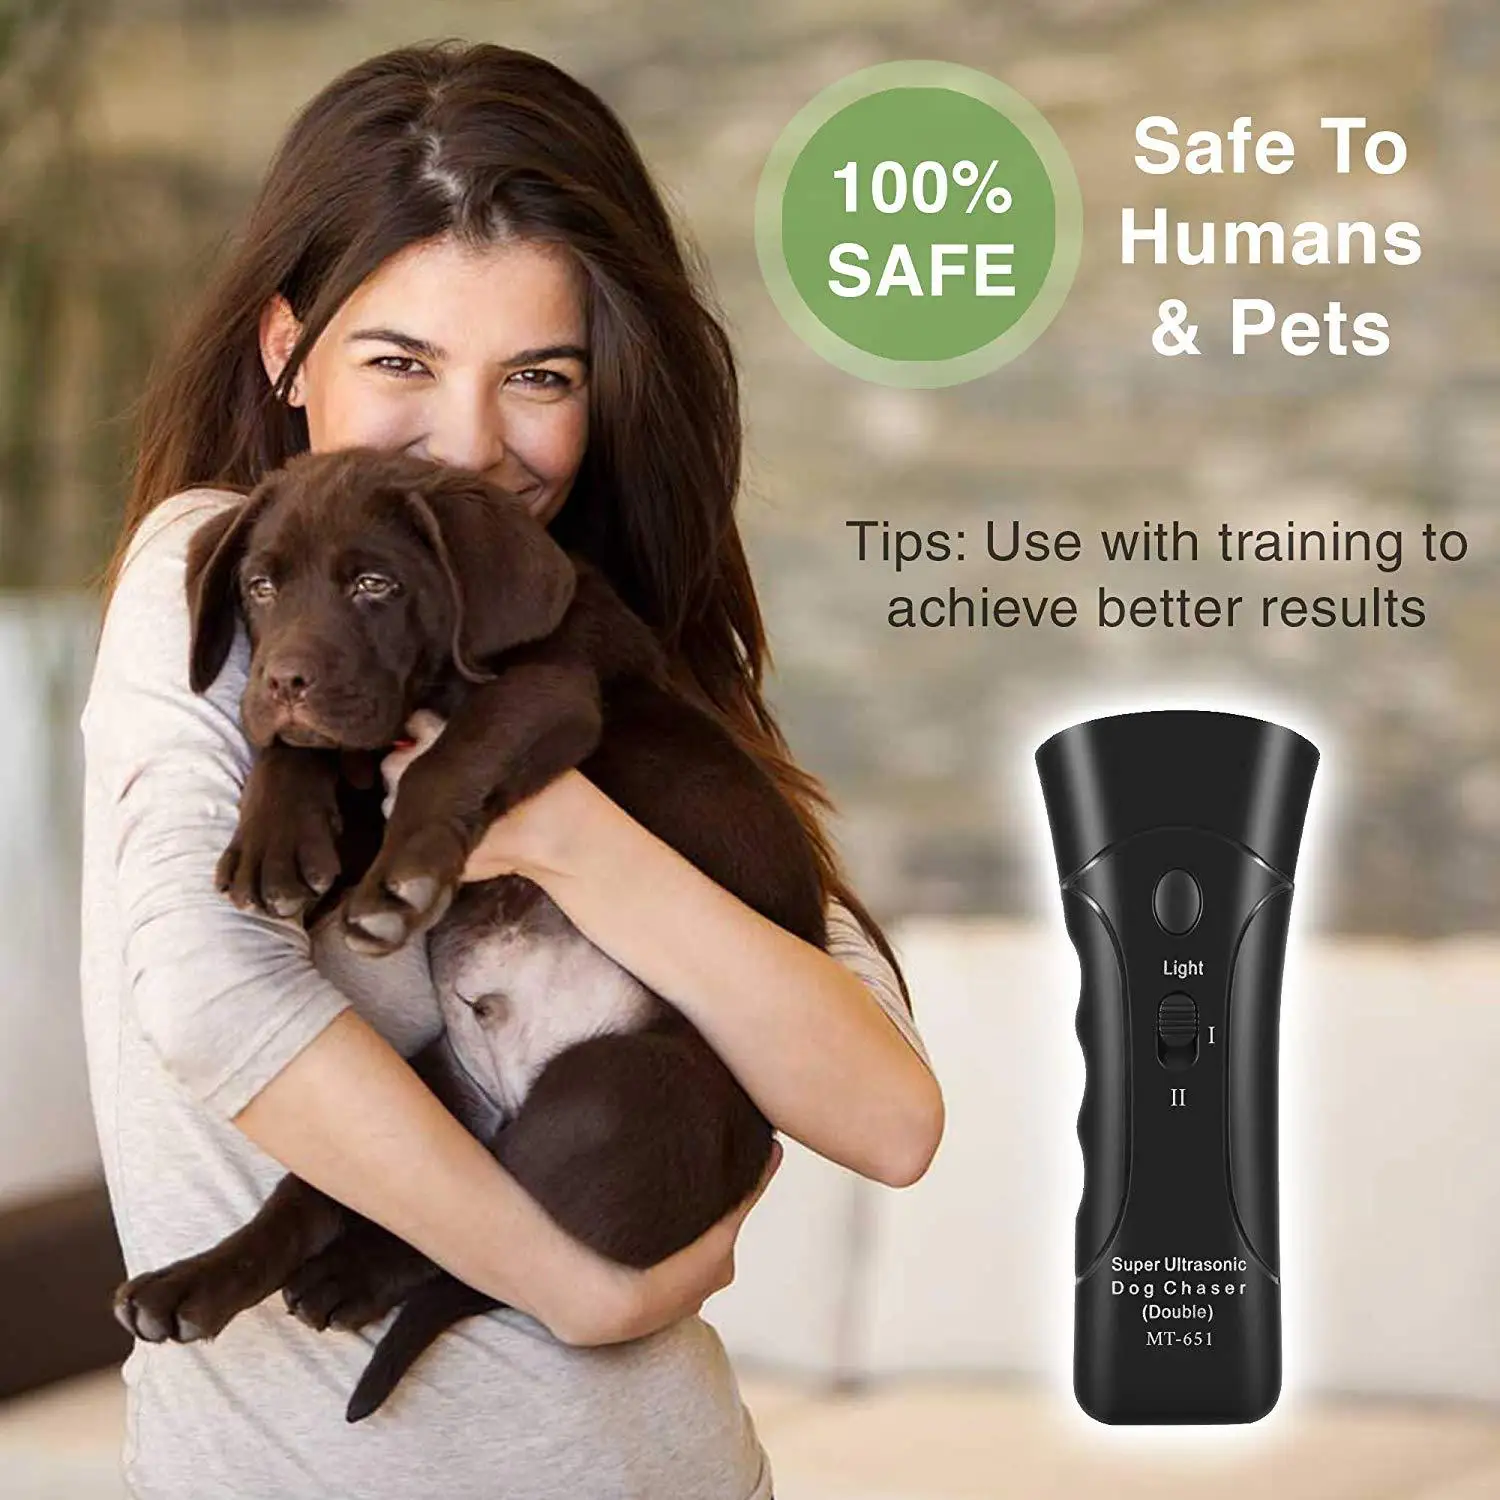 

Dog Repellent Infrared Dog Deterrent 3-in-1 Ultrasonic Handheld Pet Trainer with Flashlight Anti Barking Device, Black